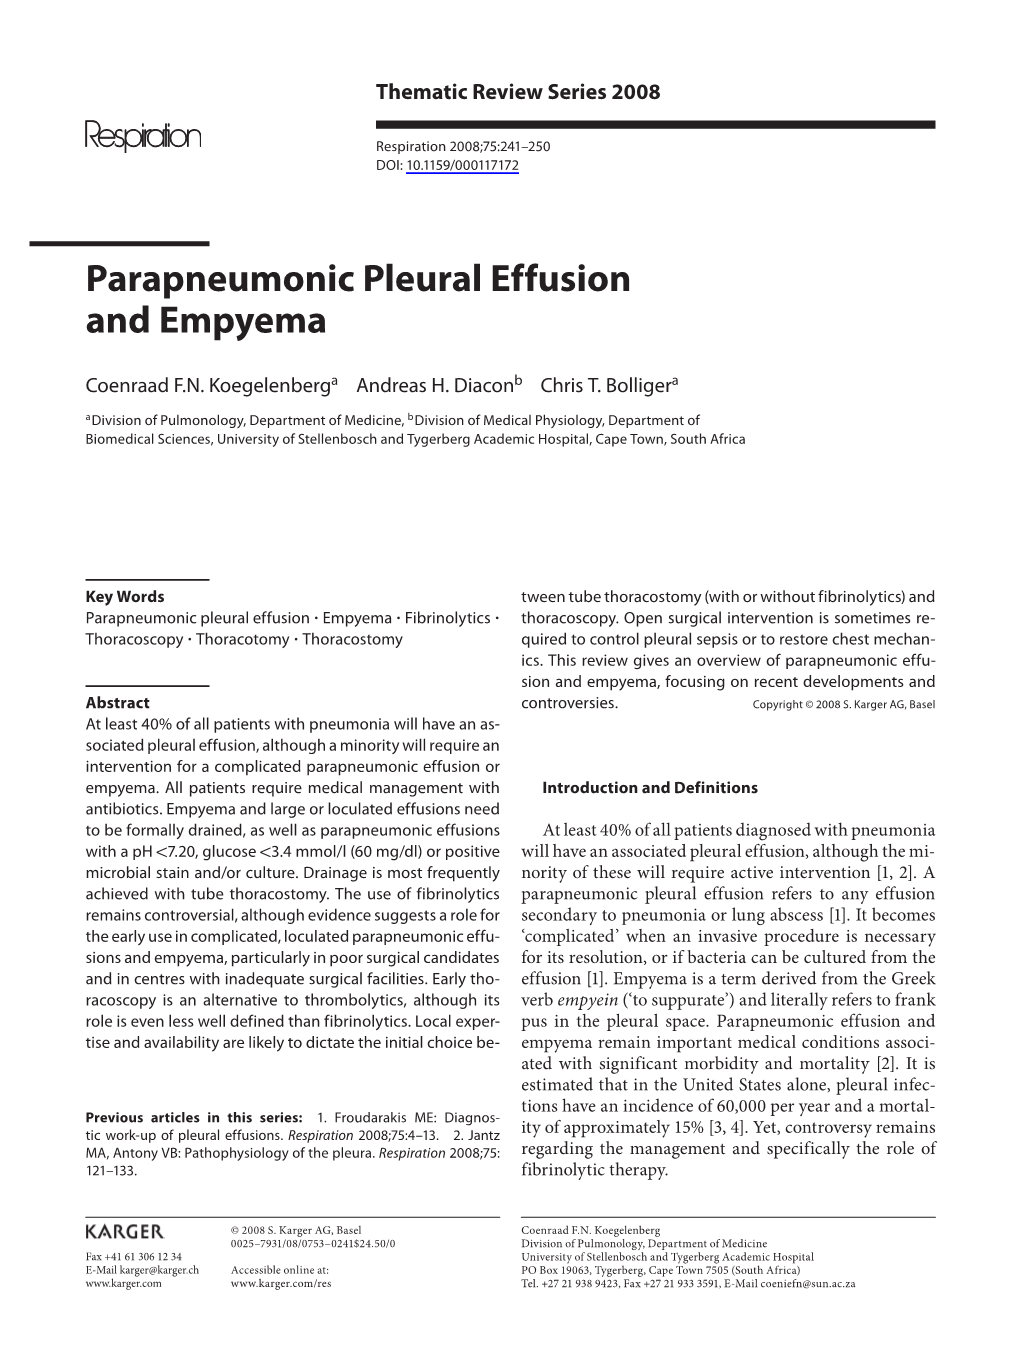 Parapneumonic Pleural Effusion and Empyema